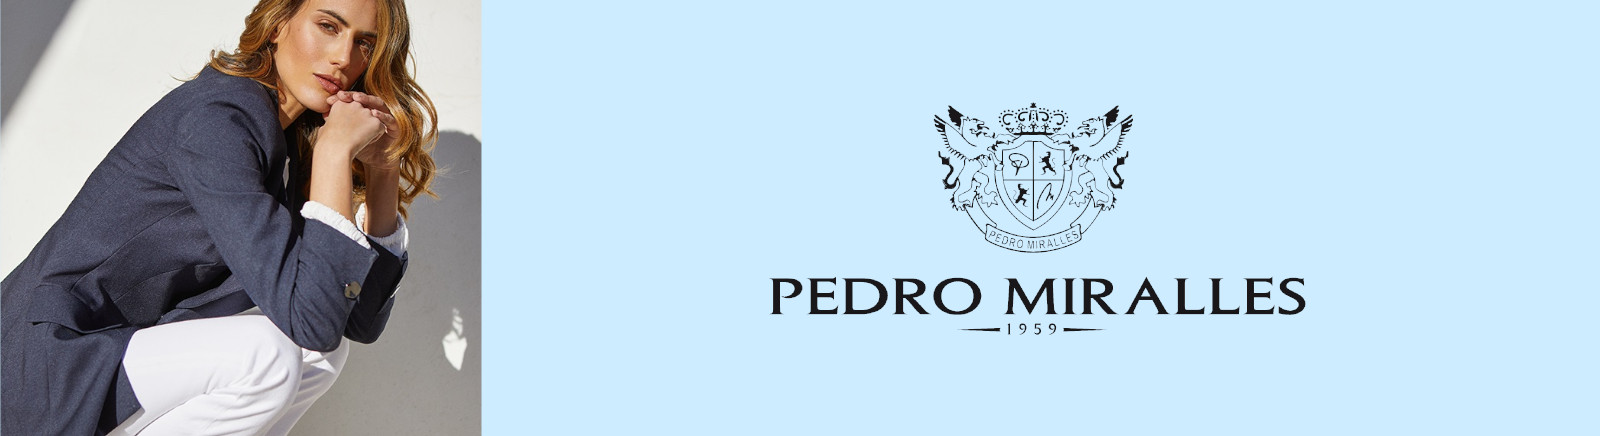 Juppen: Pedro Miralles Pumps Schuhe online kaufen online shoppen